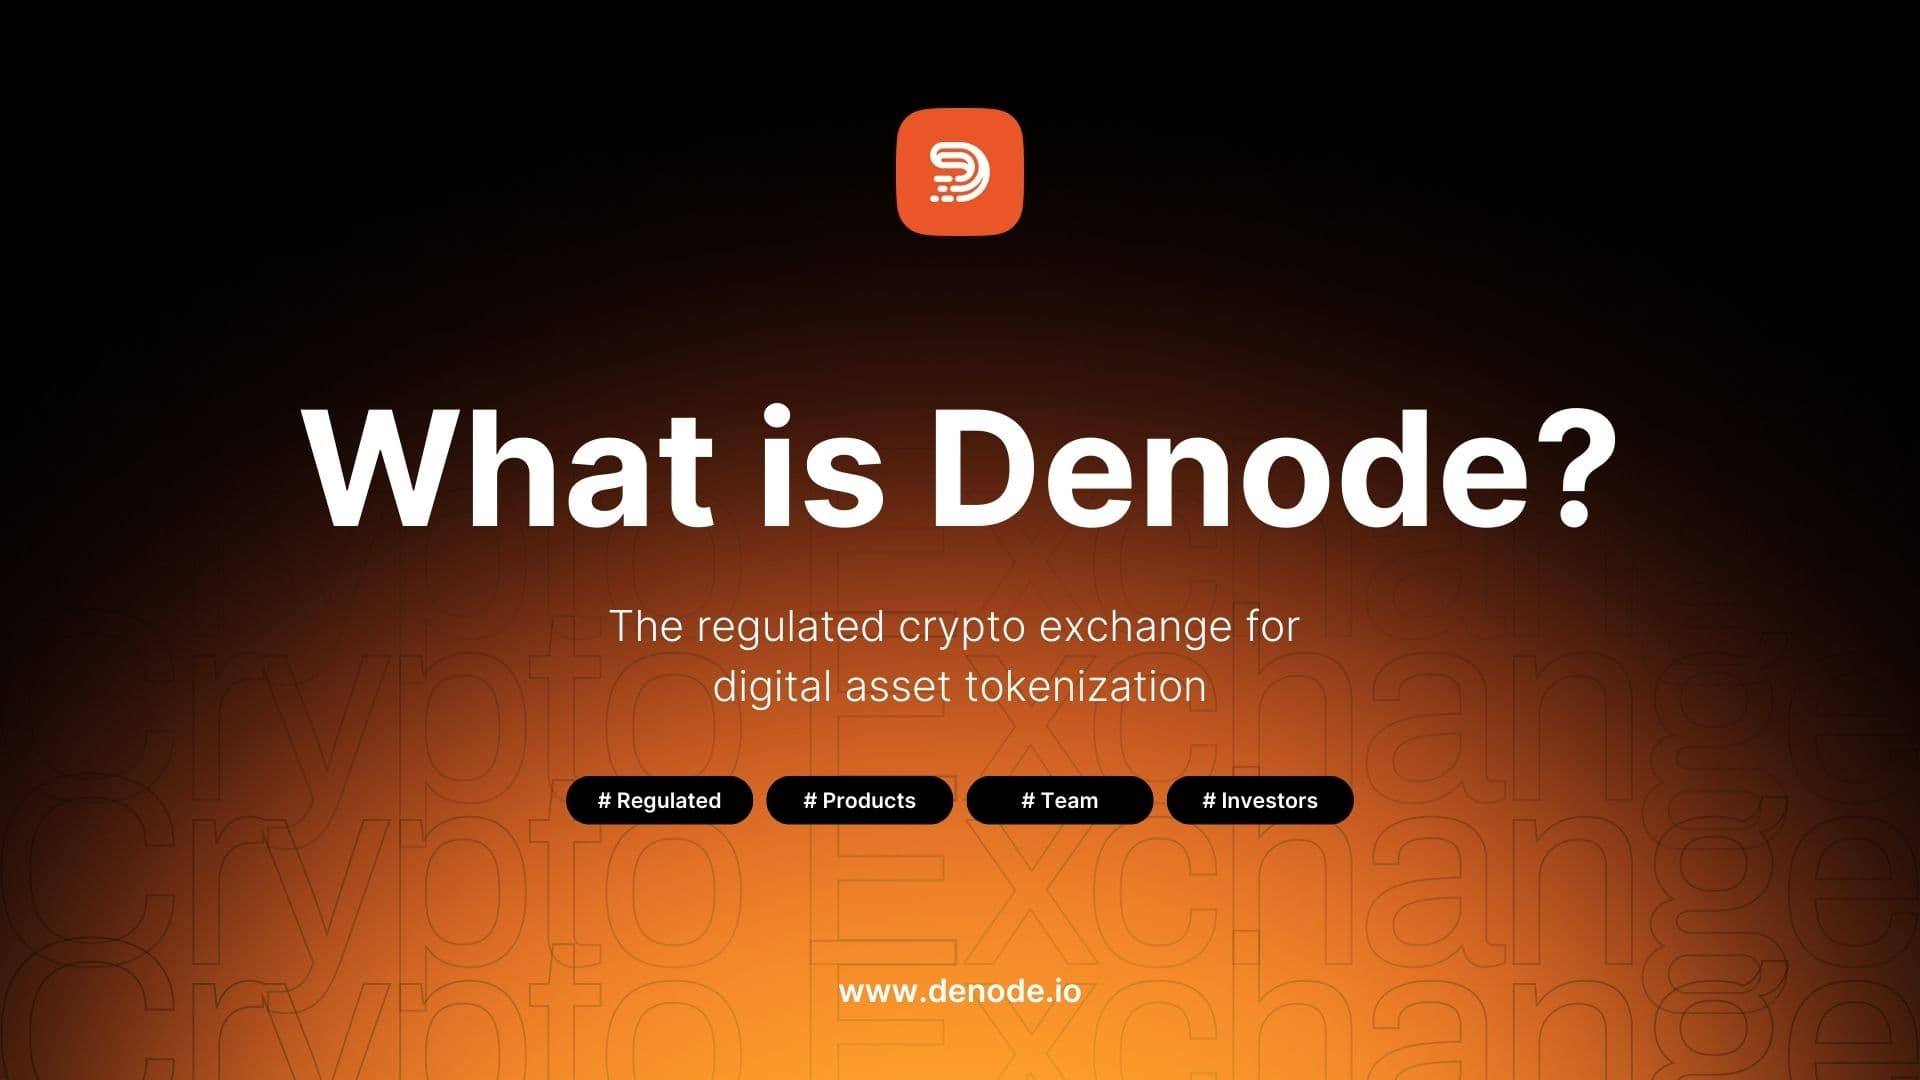 Denode - The Regulated Crypto Exchange for Digital Asset Tokenization